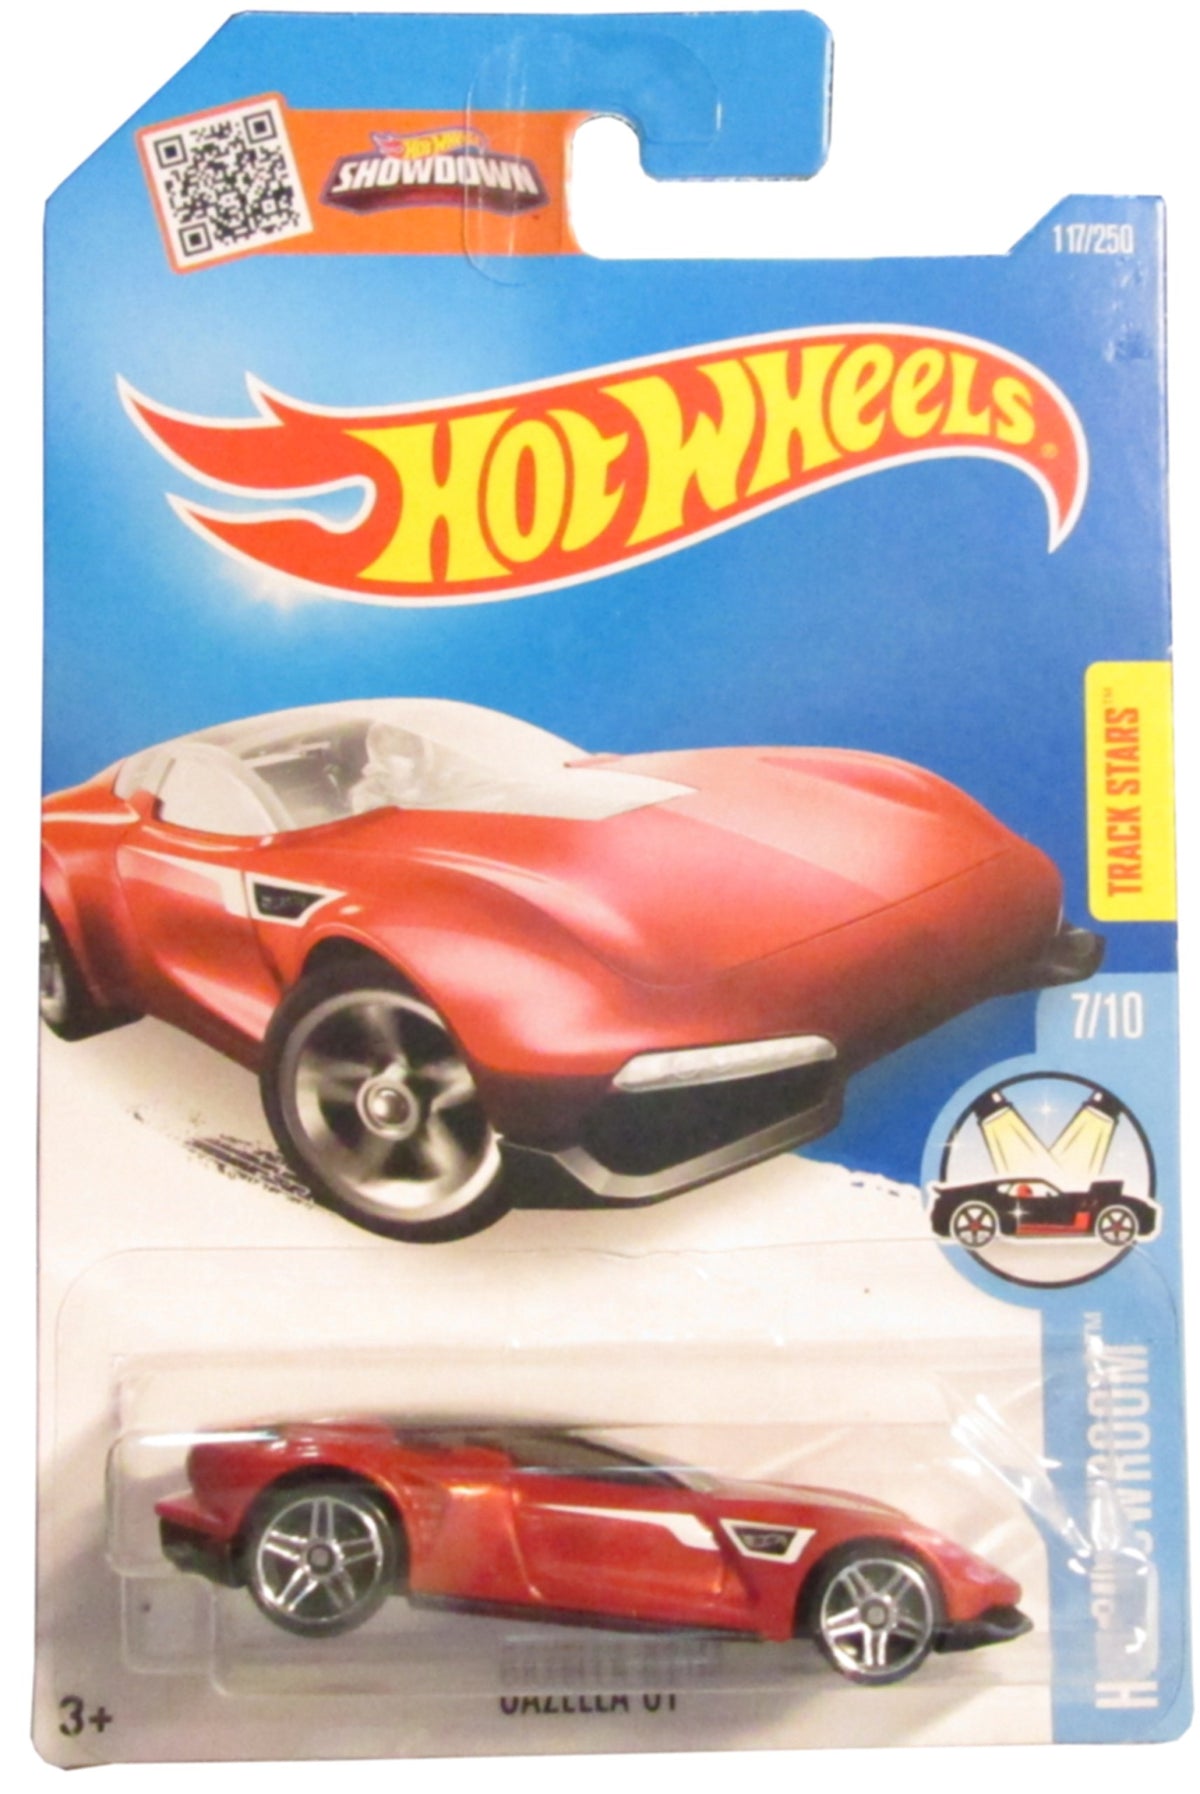 Hot Wheels HW Showroom 7/10 Gazella GT No. 117/250